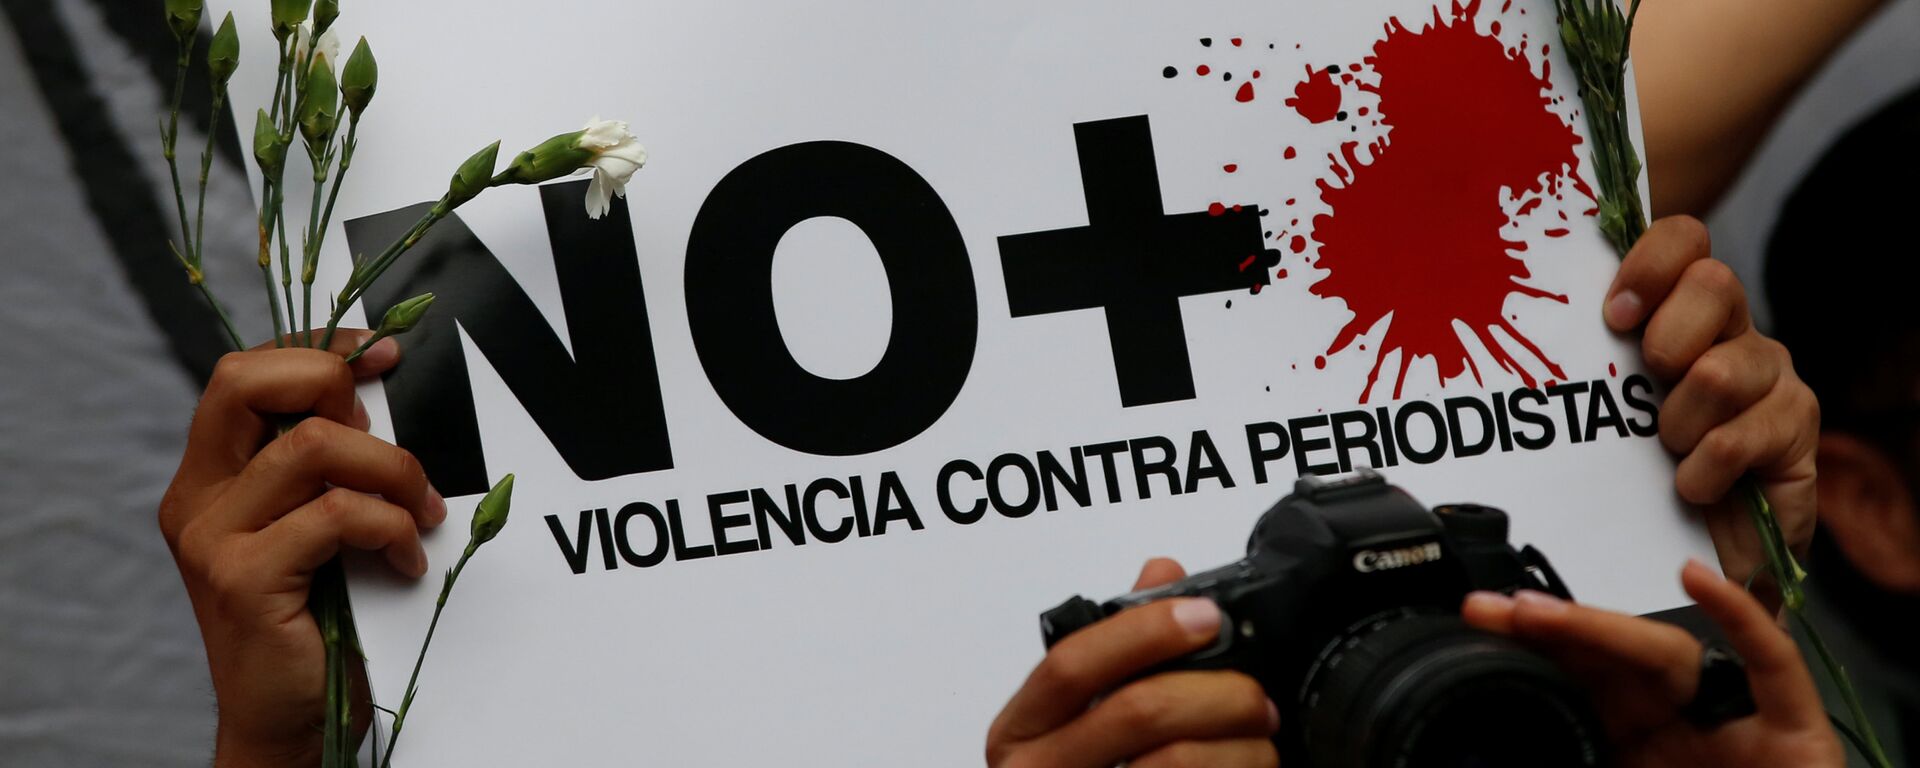 Protesta contra violencia contra periodistas en México - Sputnik Mundo, 1920, 04.01.2022